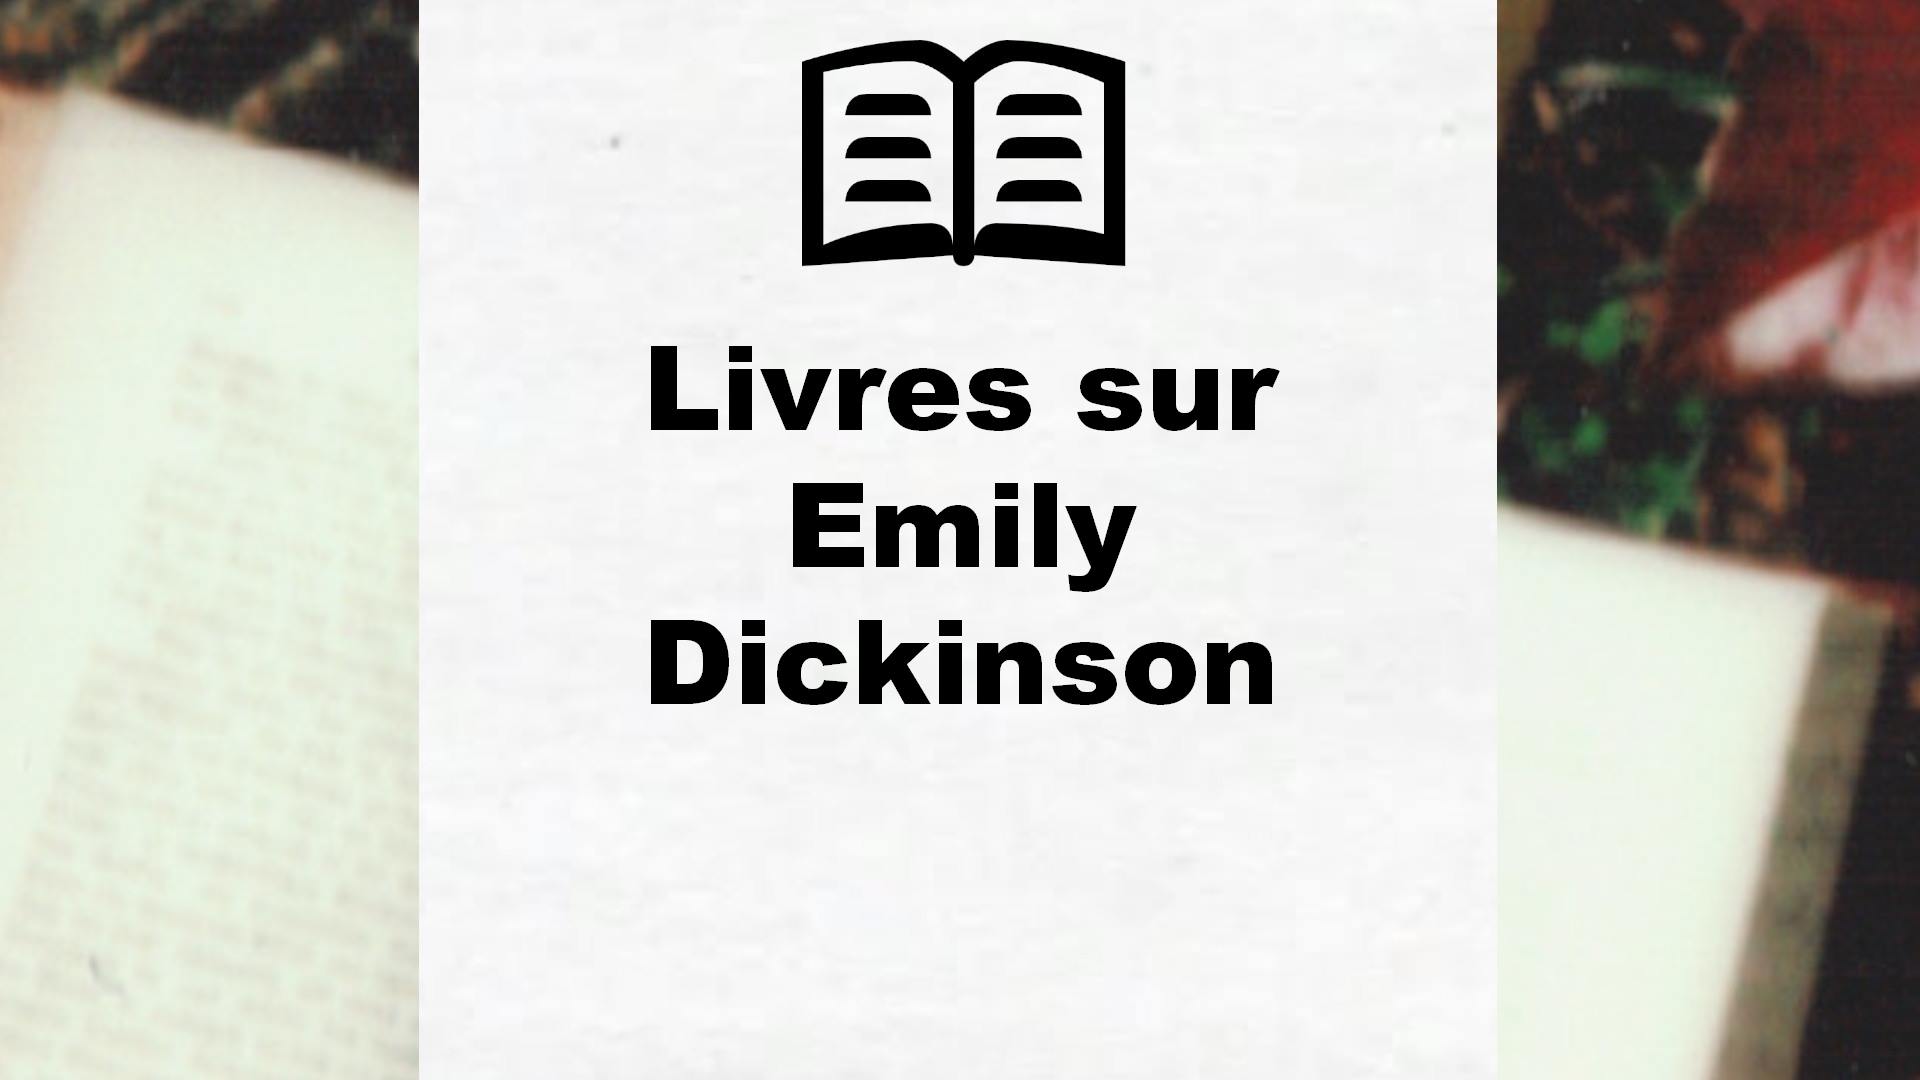 Livres sur Emily Dickinson